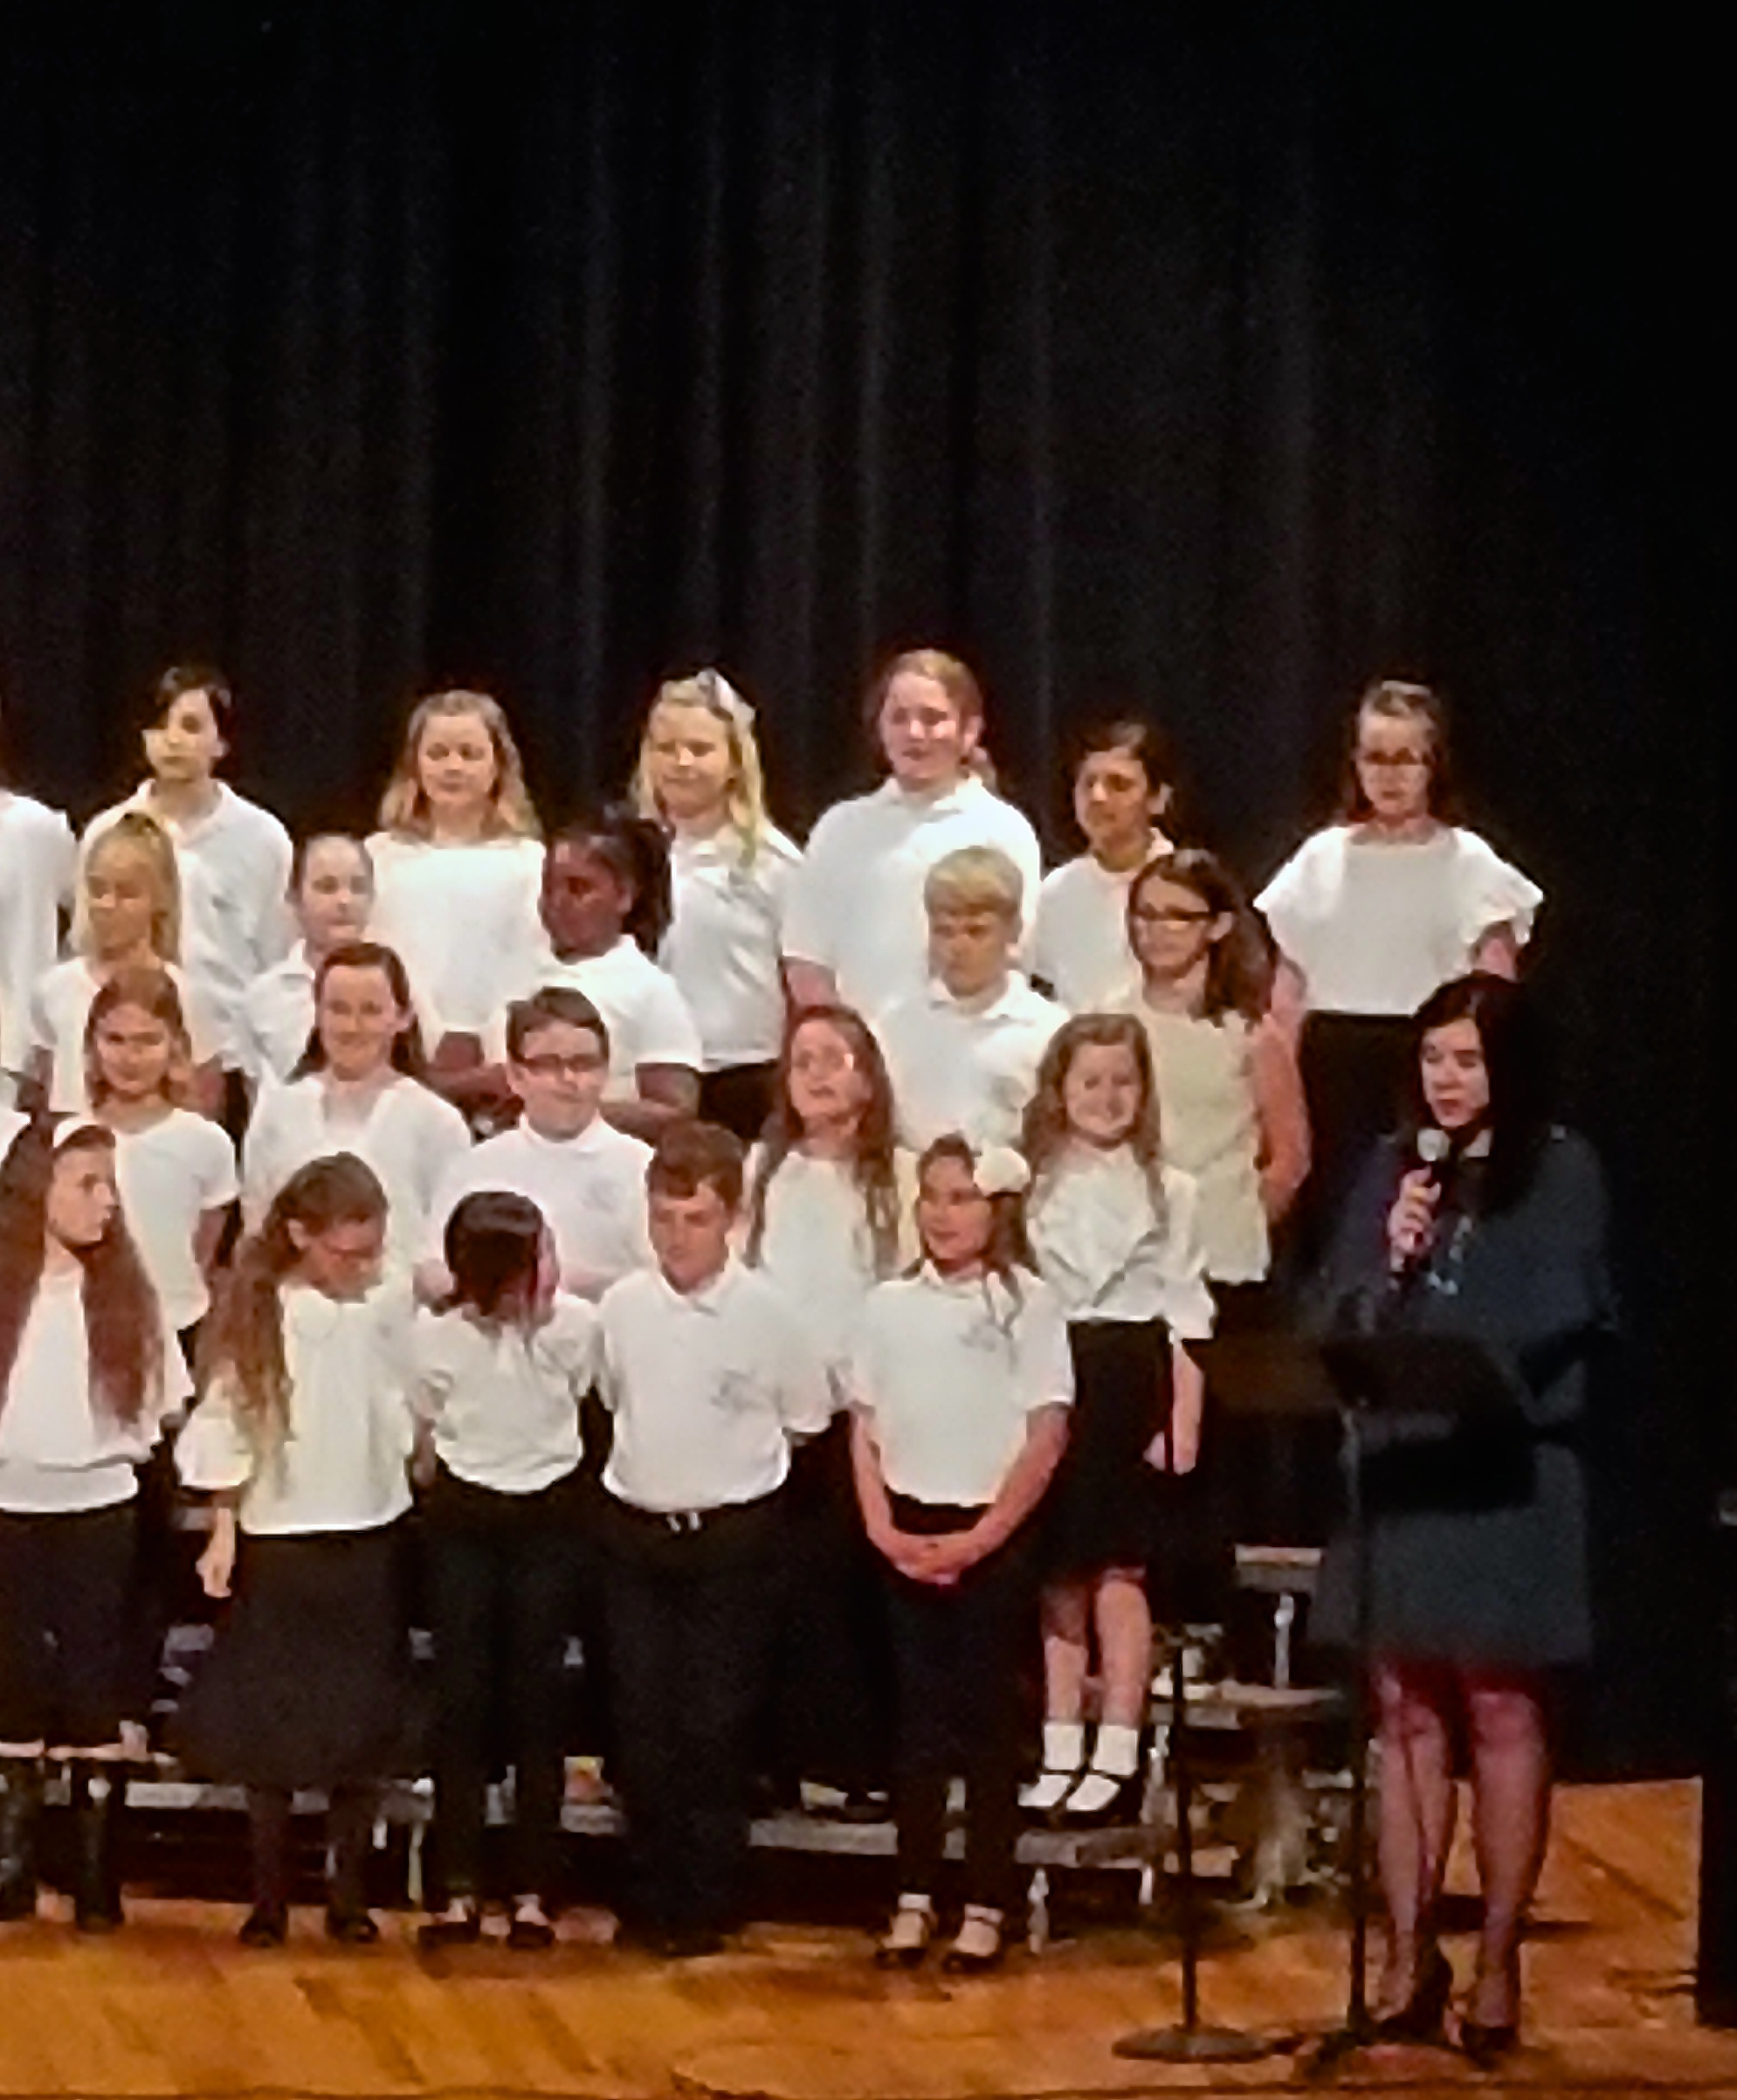 Knox County Schools Elementary Honors Choir, April 22, 2018